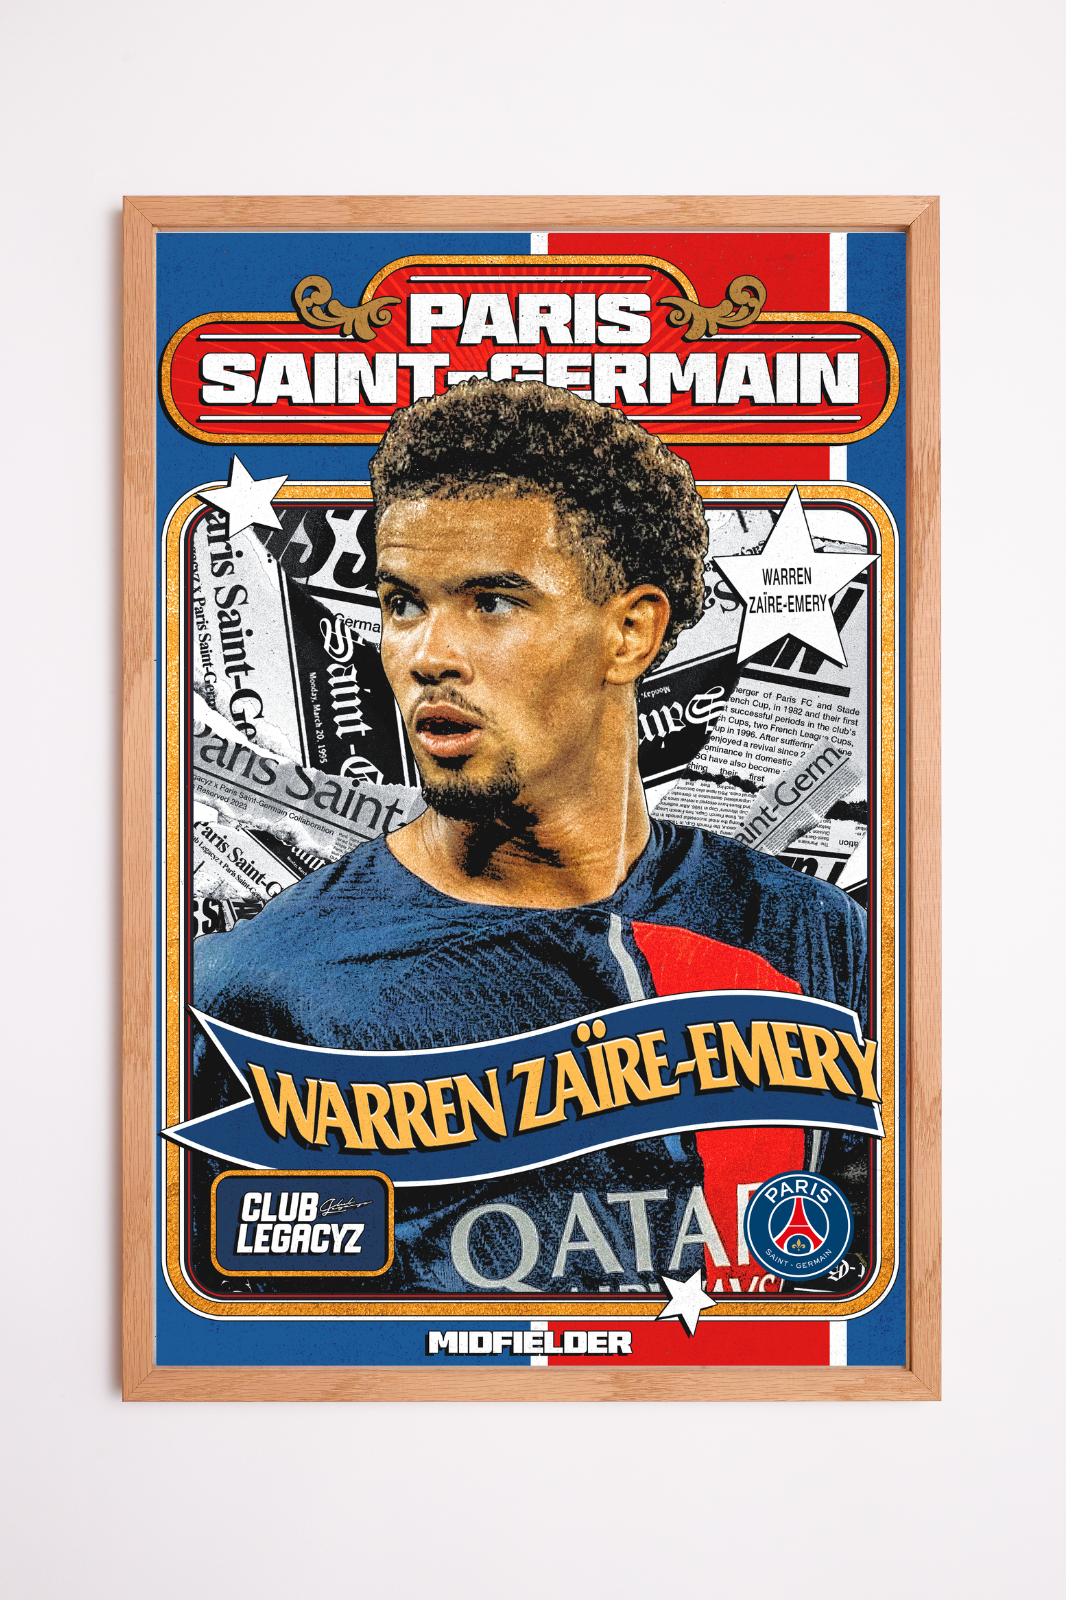 Paris Saint-Germain - Warren Zaïre-Emery Retro Poster limited to 100